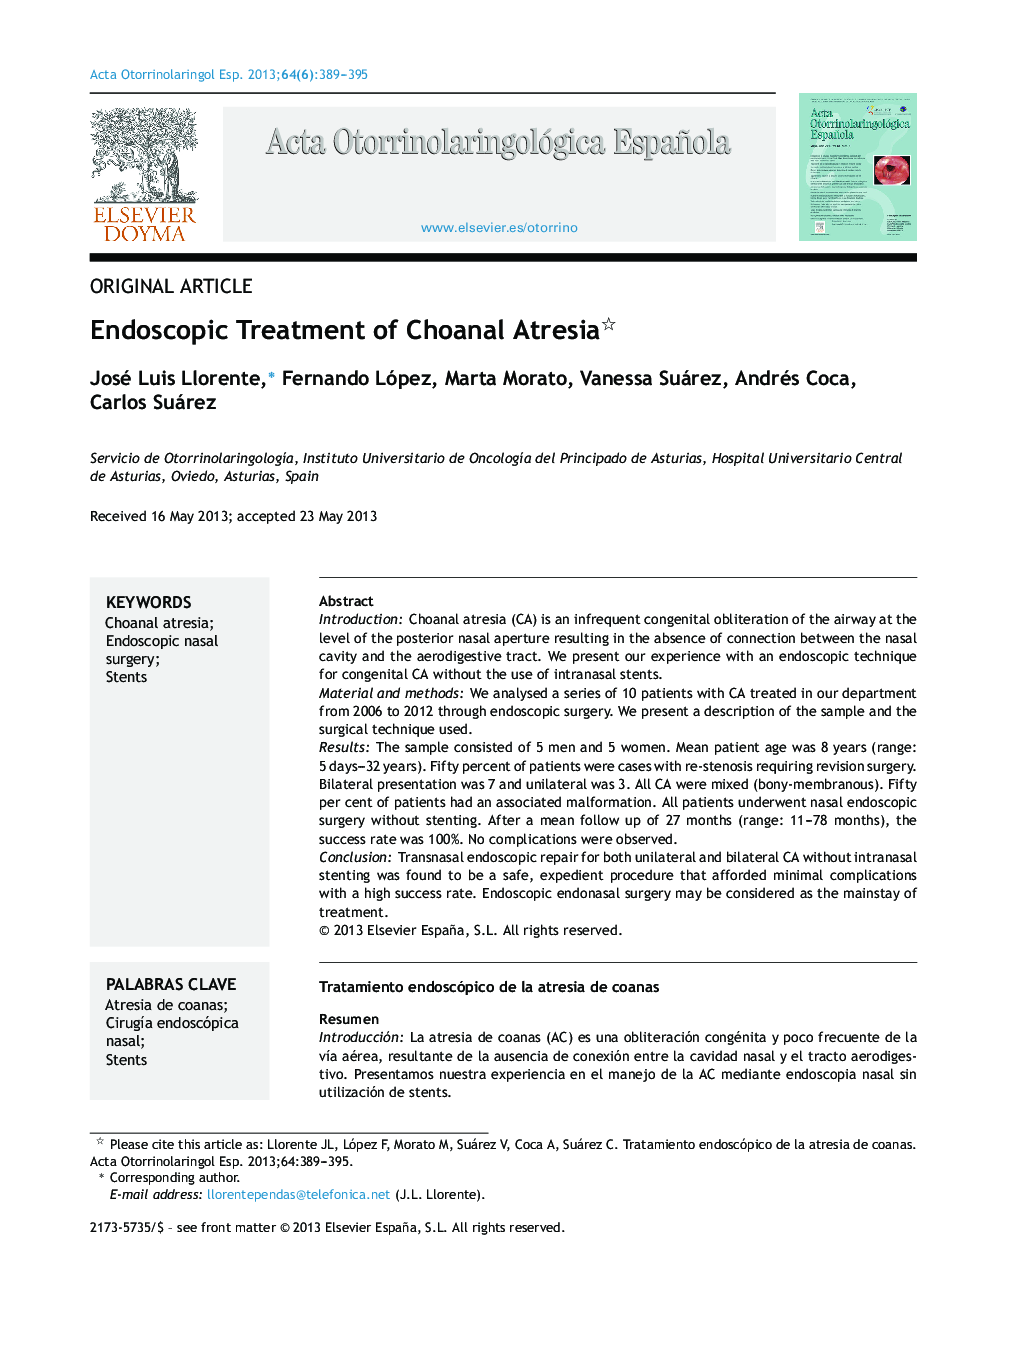 Endoscopic Treatment of Choanal Atresia 